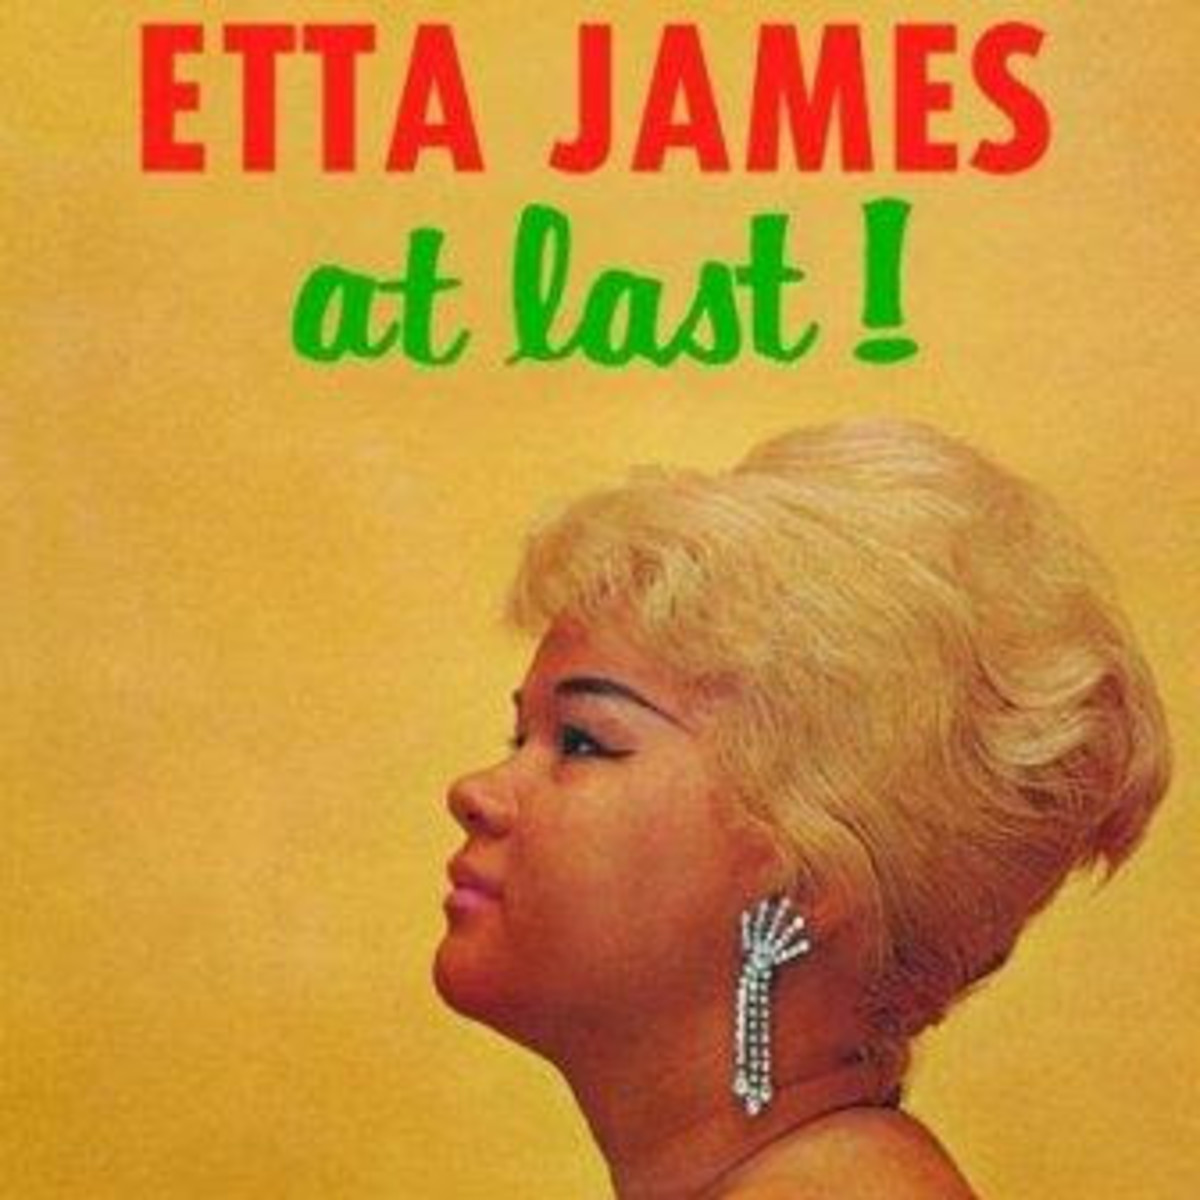 Etta James, "At Last" 